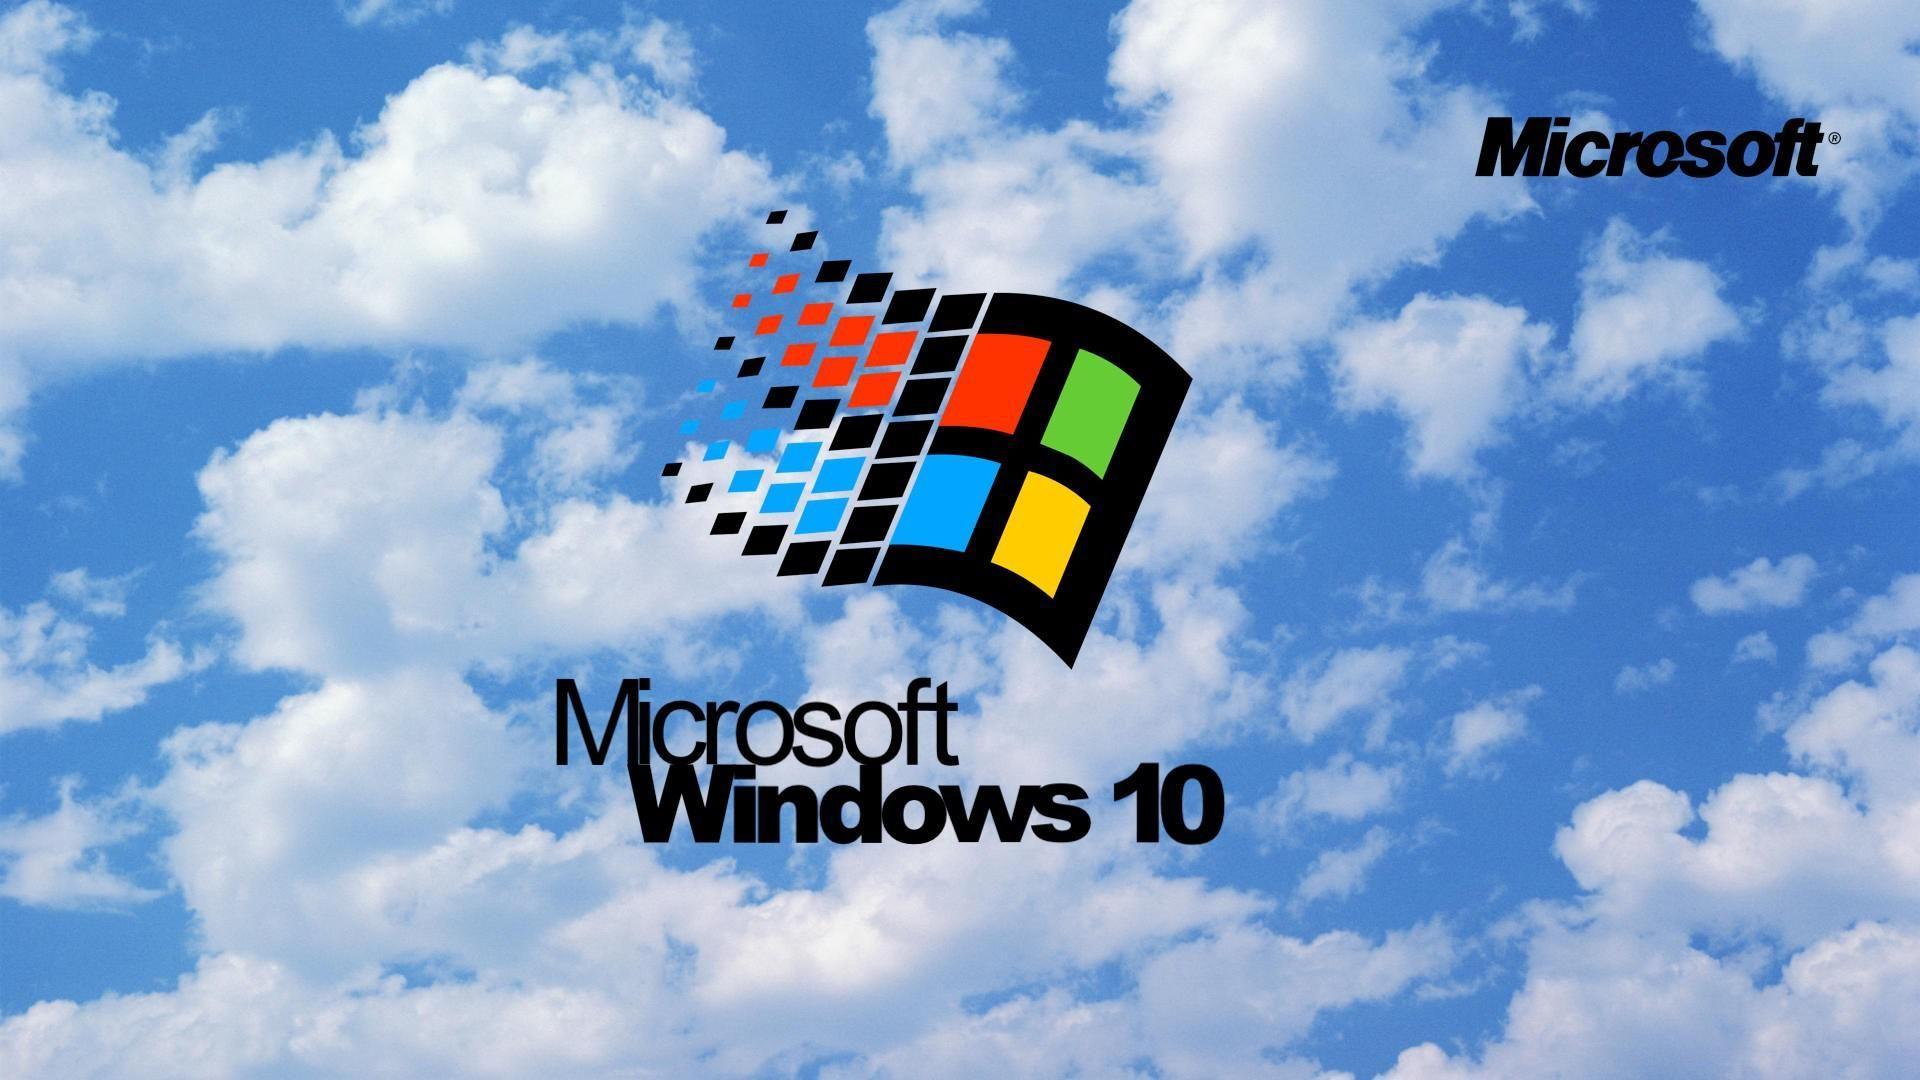  Microsoft Bing Hintergrundbild 1920x1080. Microsoft Windows 98 Wallpaper Free Microsoft Windows 98 Background